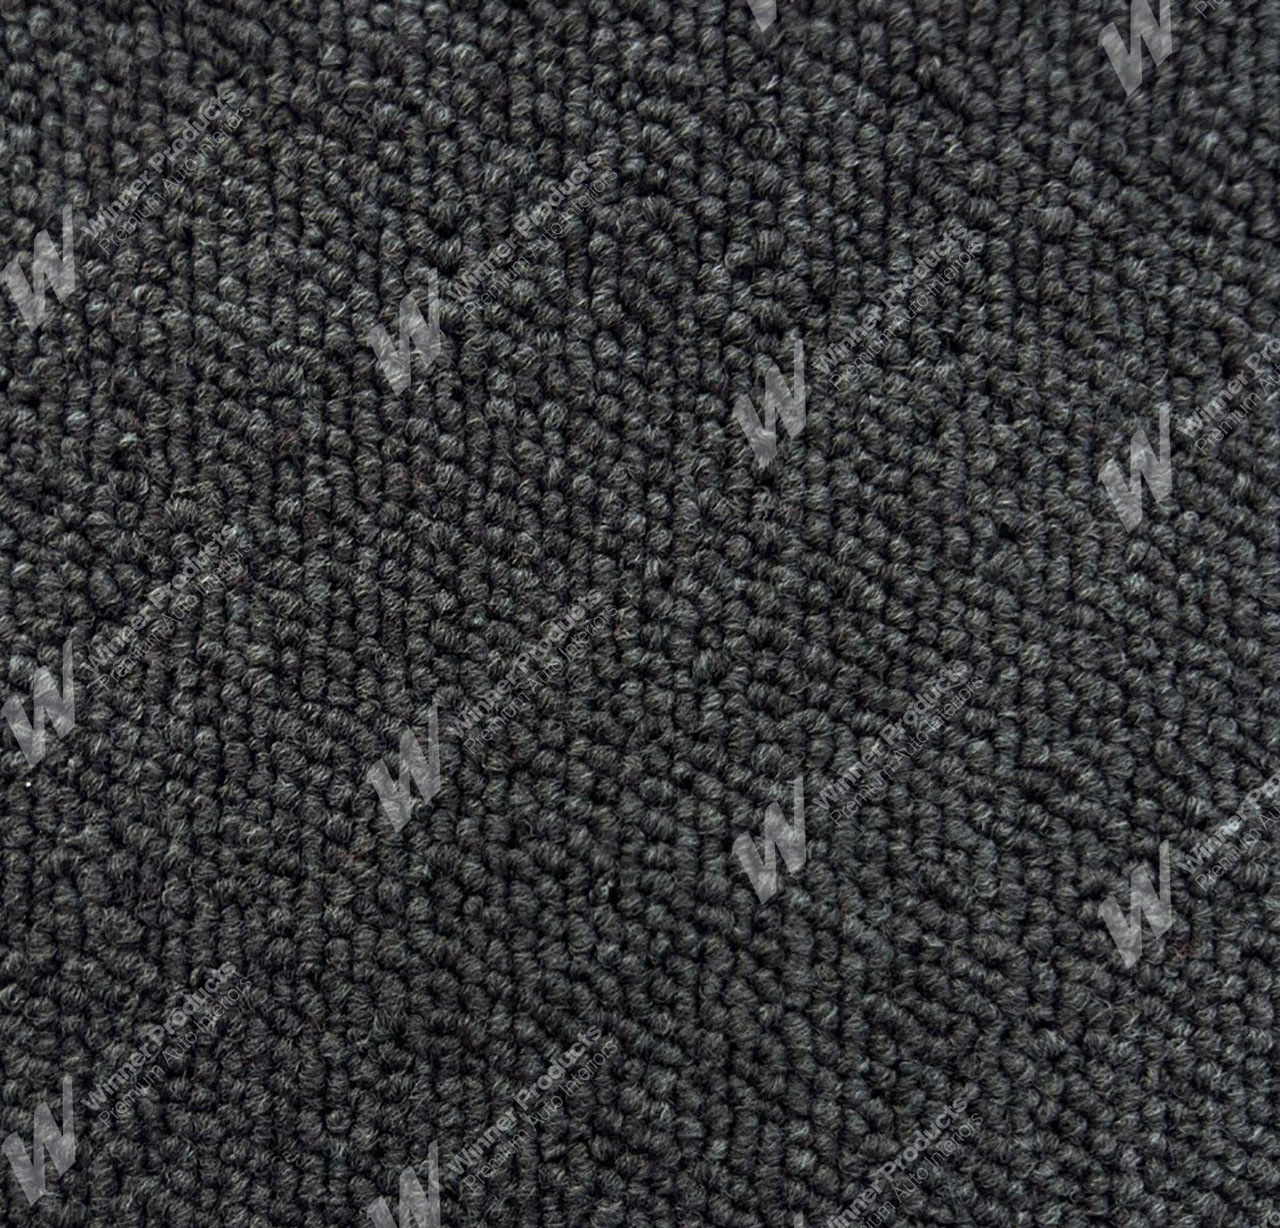 Holden Kingswood HJ Kingswood Wagon 14Y Dove Grey & Cloth Carpet (Image 1 of 1)